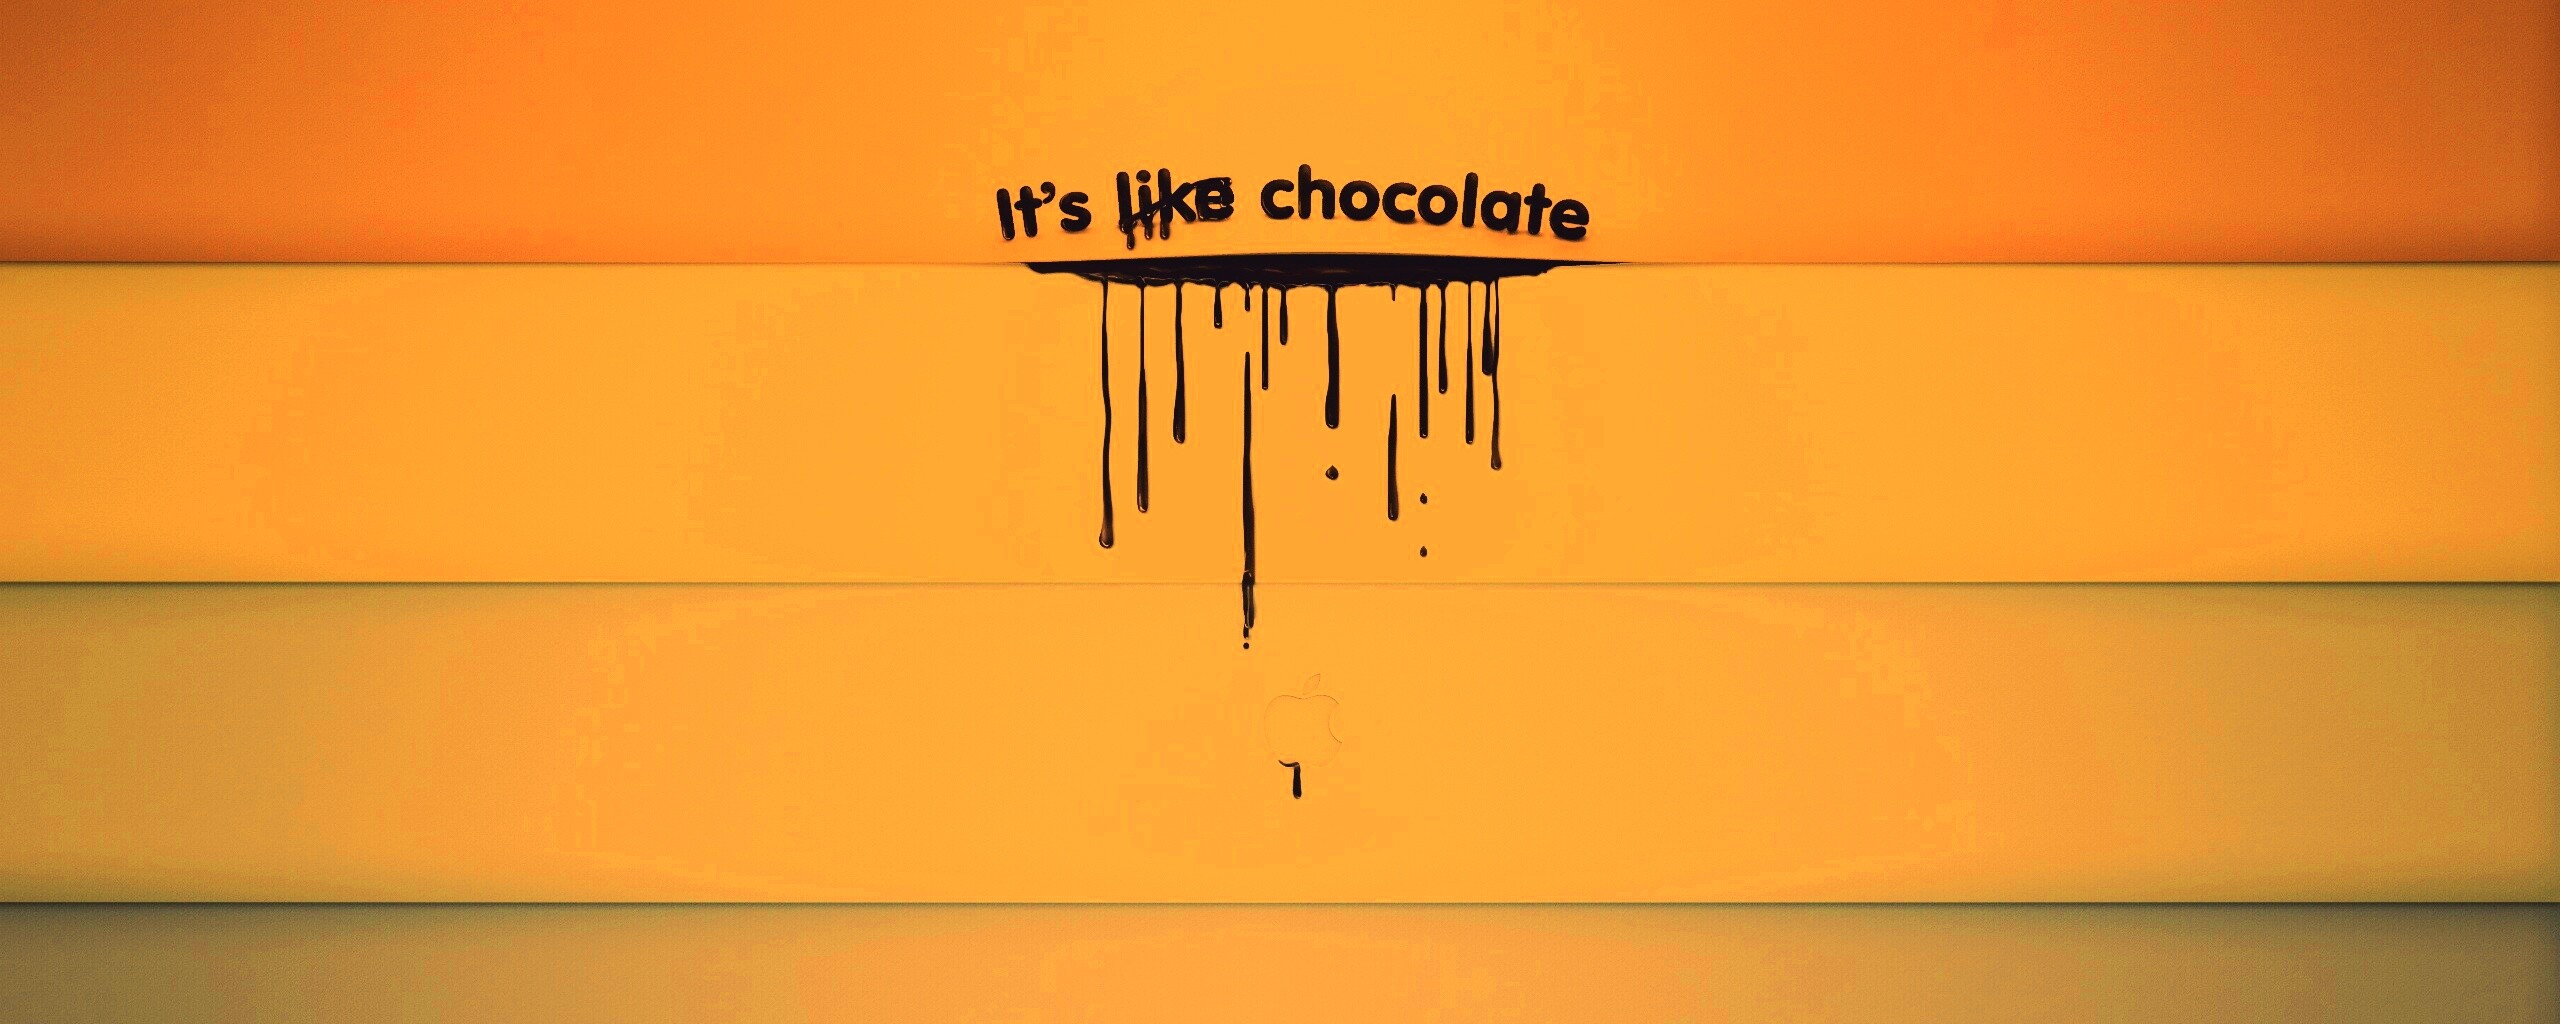 It"s not like chocolate обои